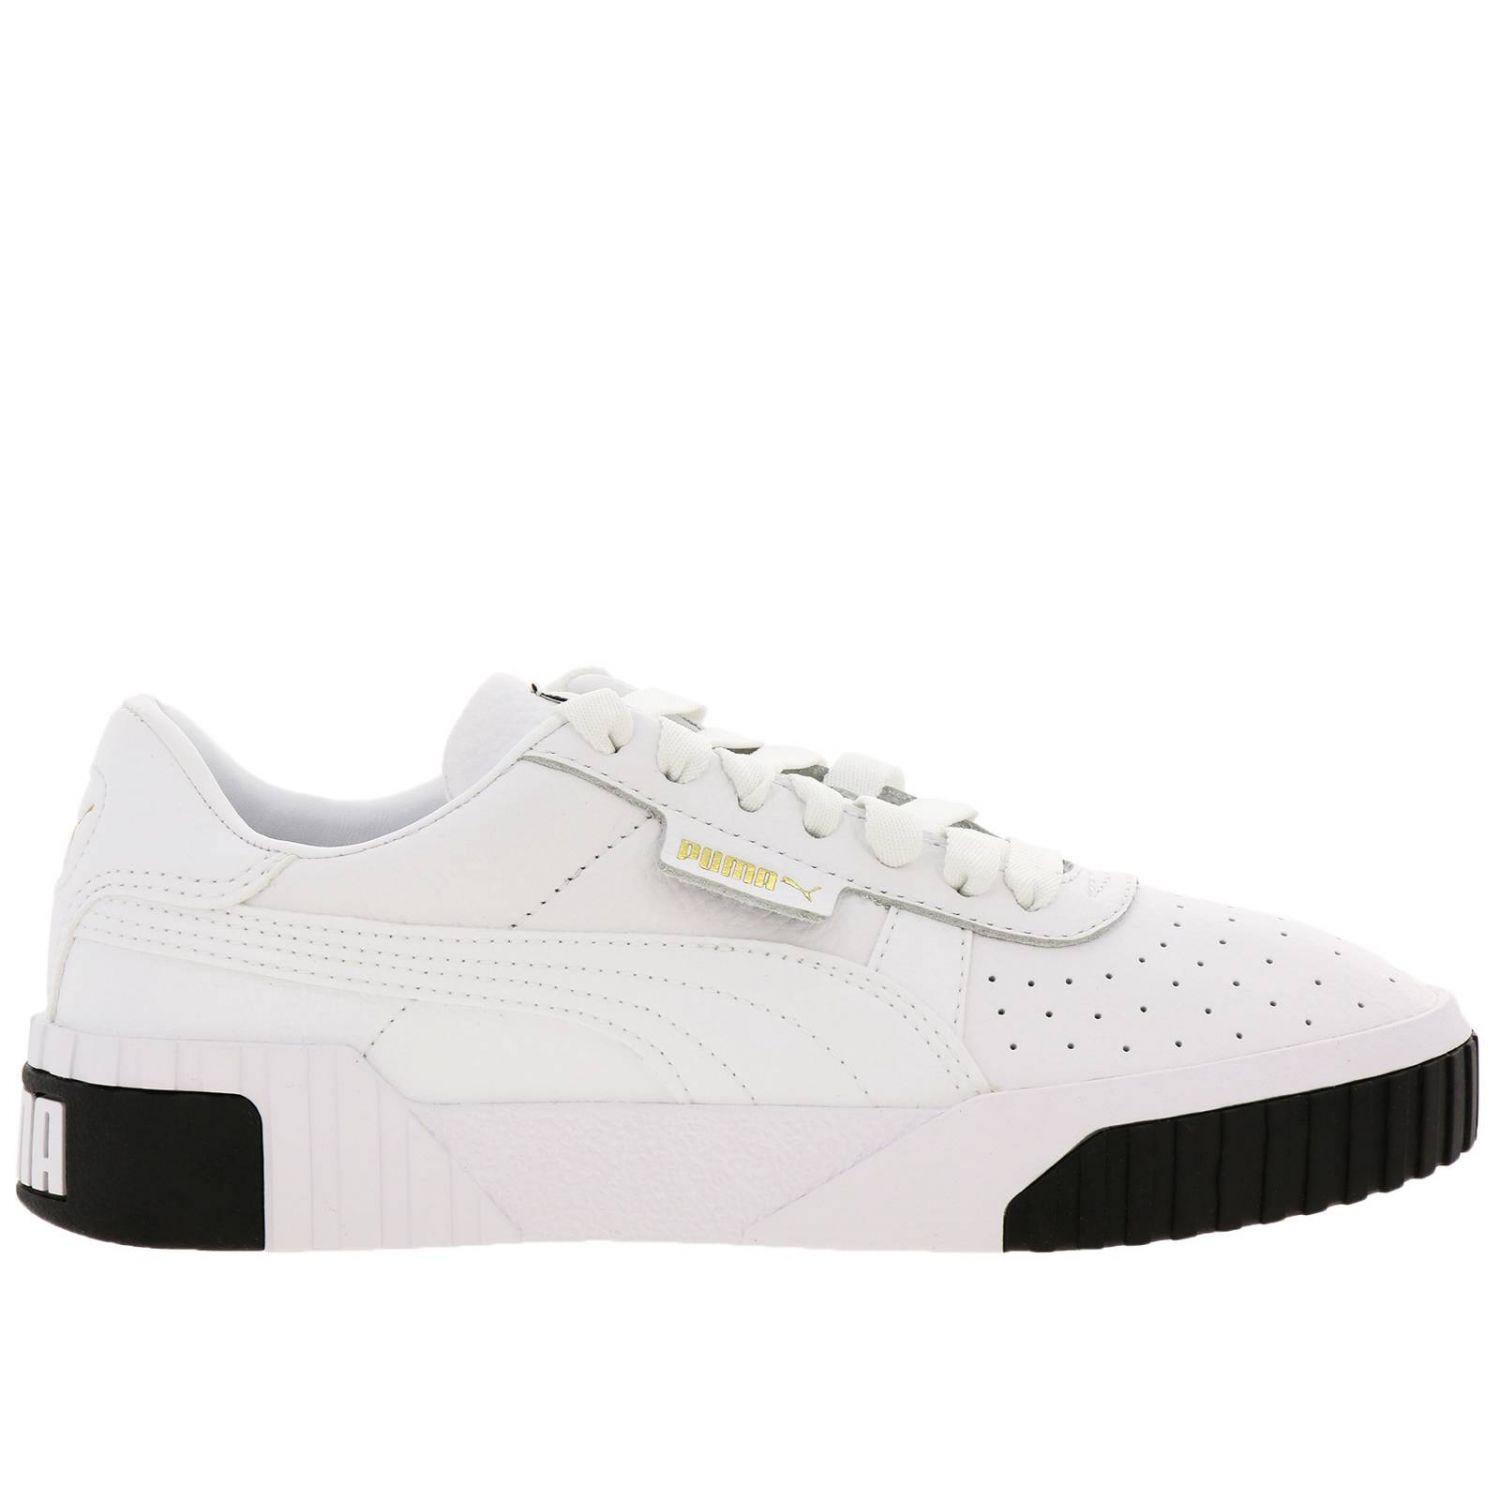 puma white leather shoes womens